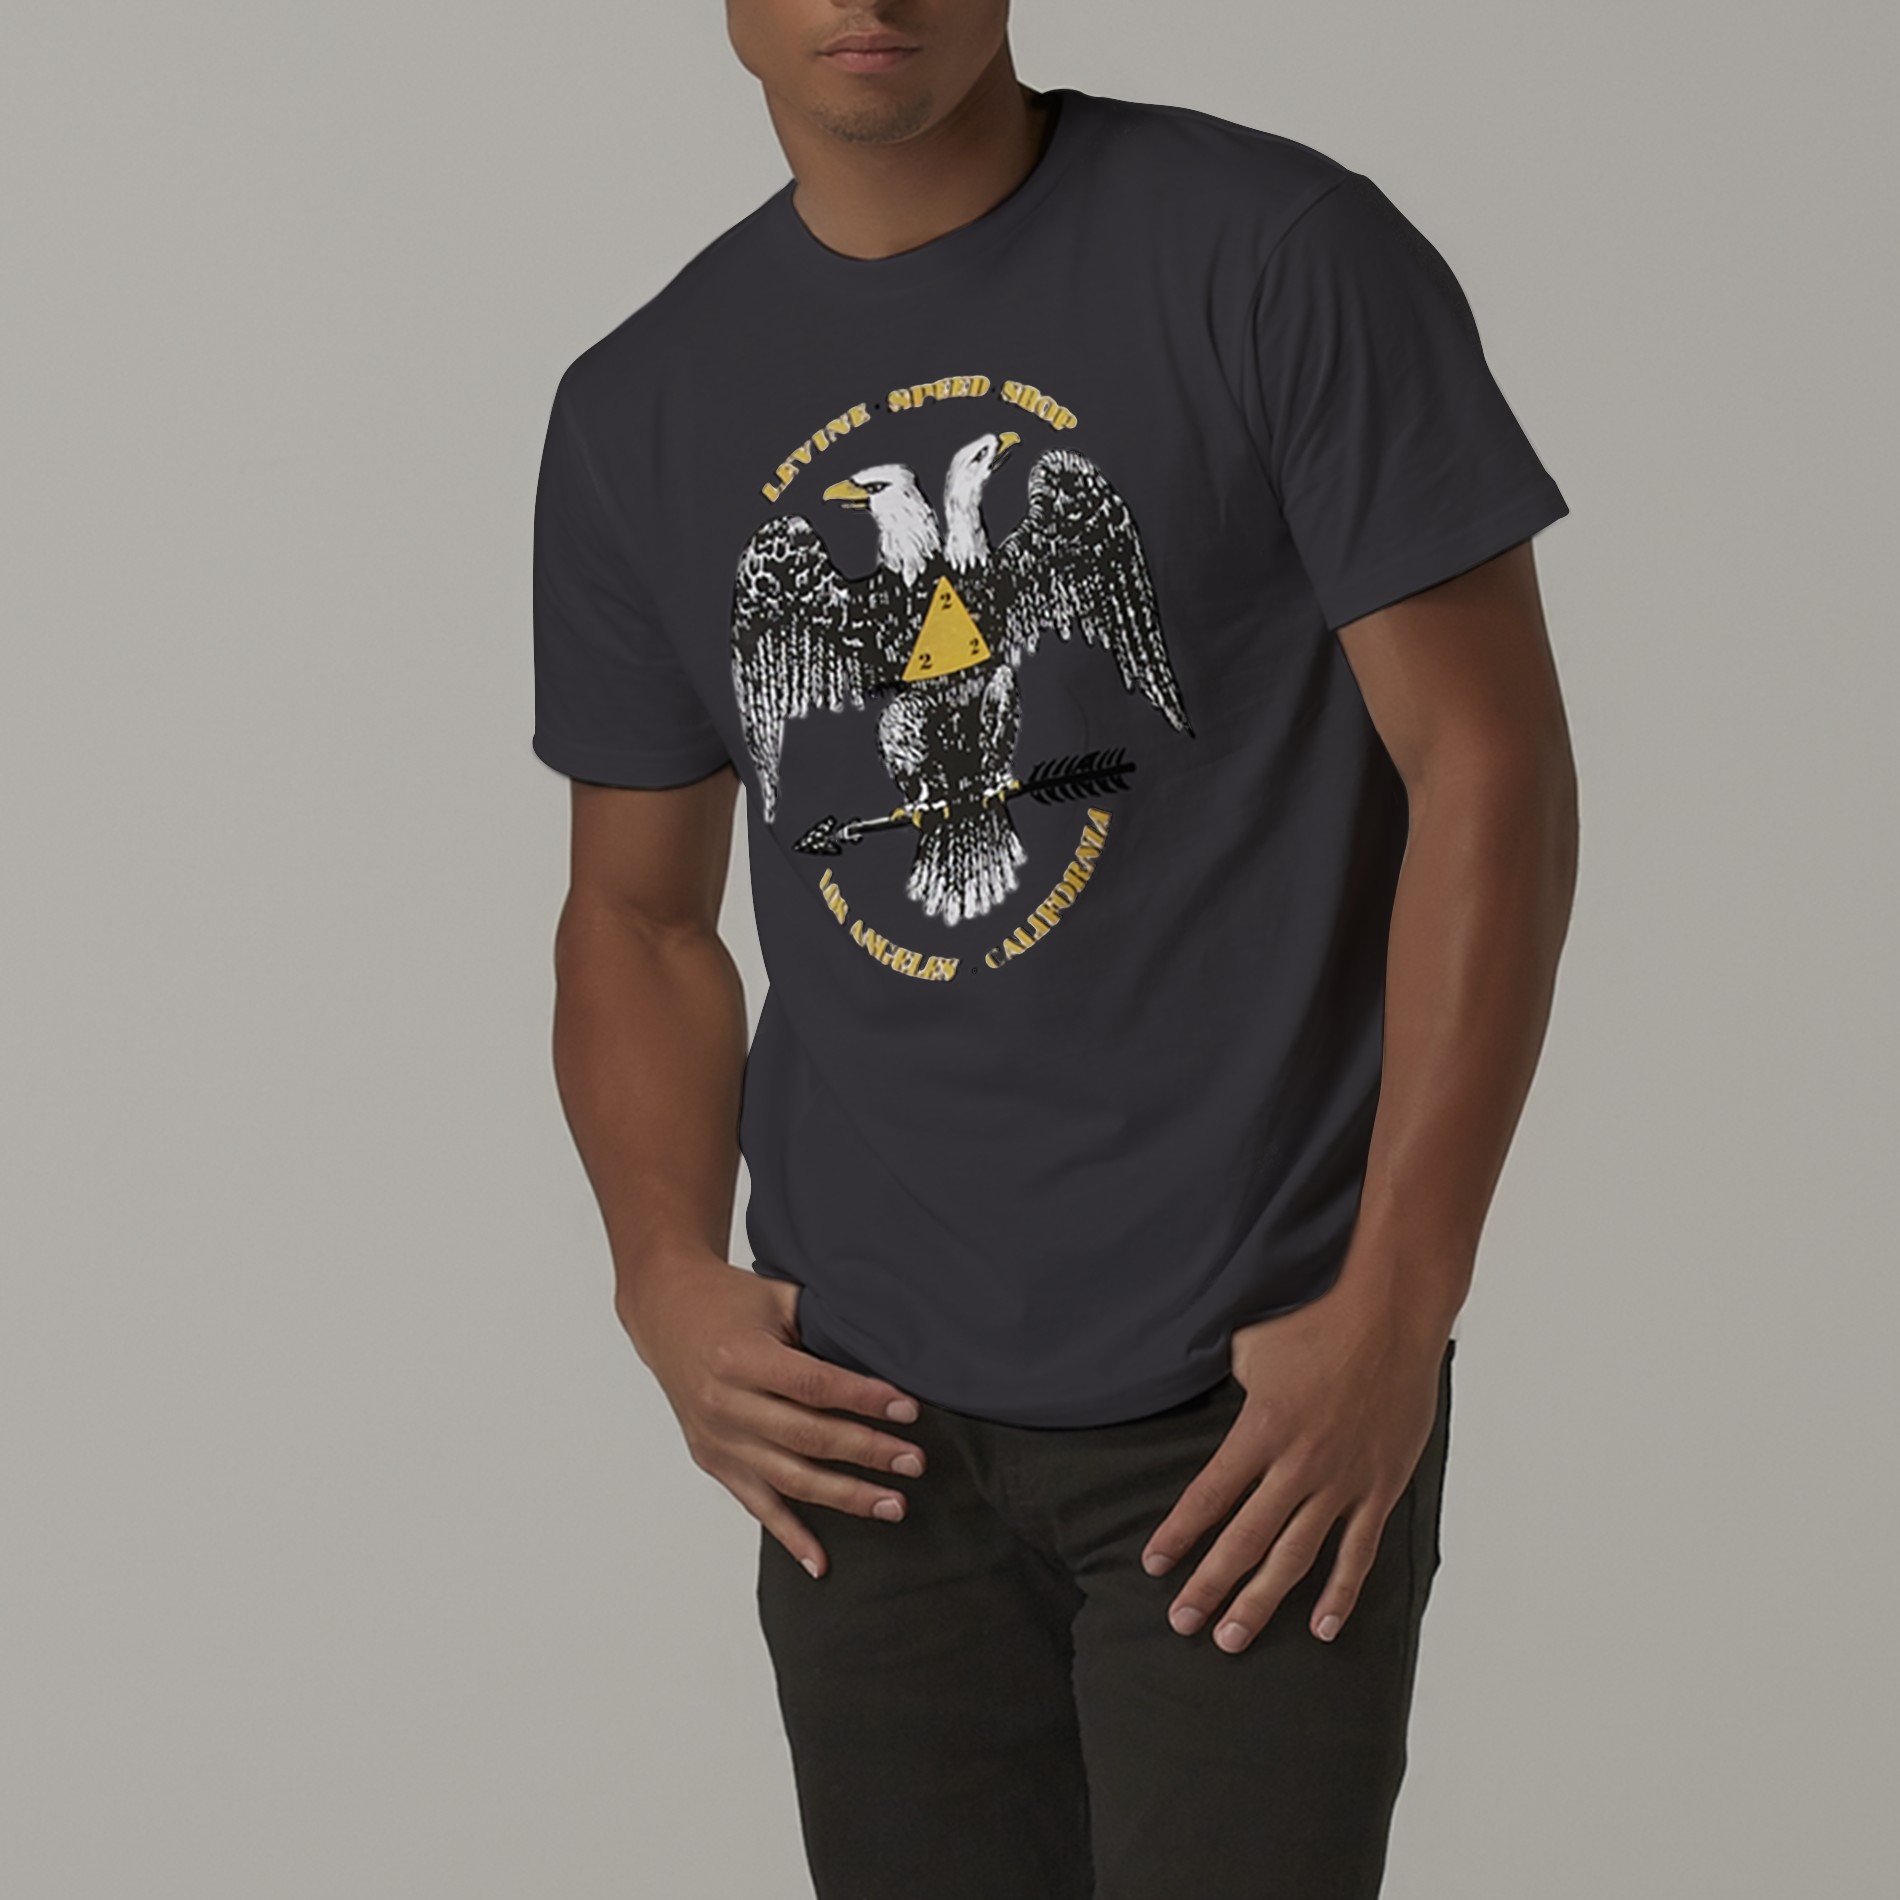 Adam Levine Men's Graphic T-Shirt - Levine Speed Shop